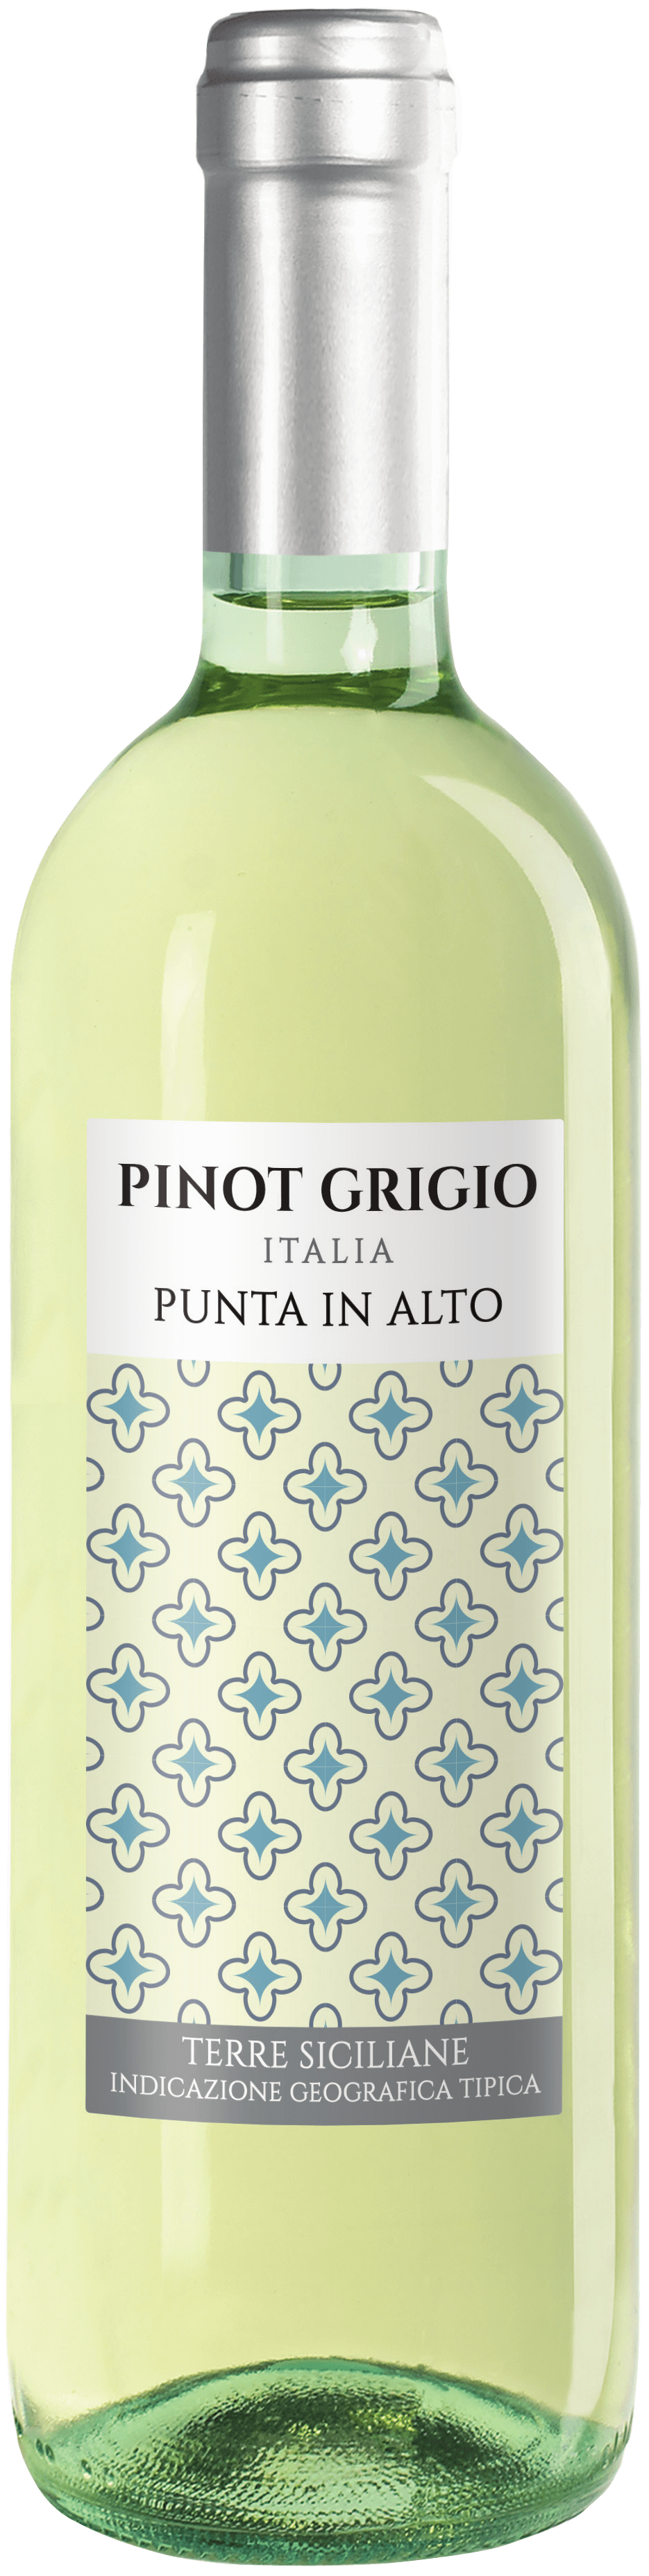 Pinot Grigio Punta in Alto